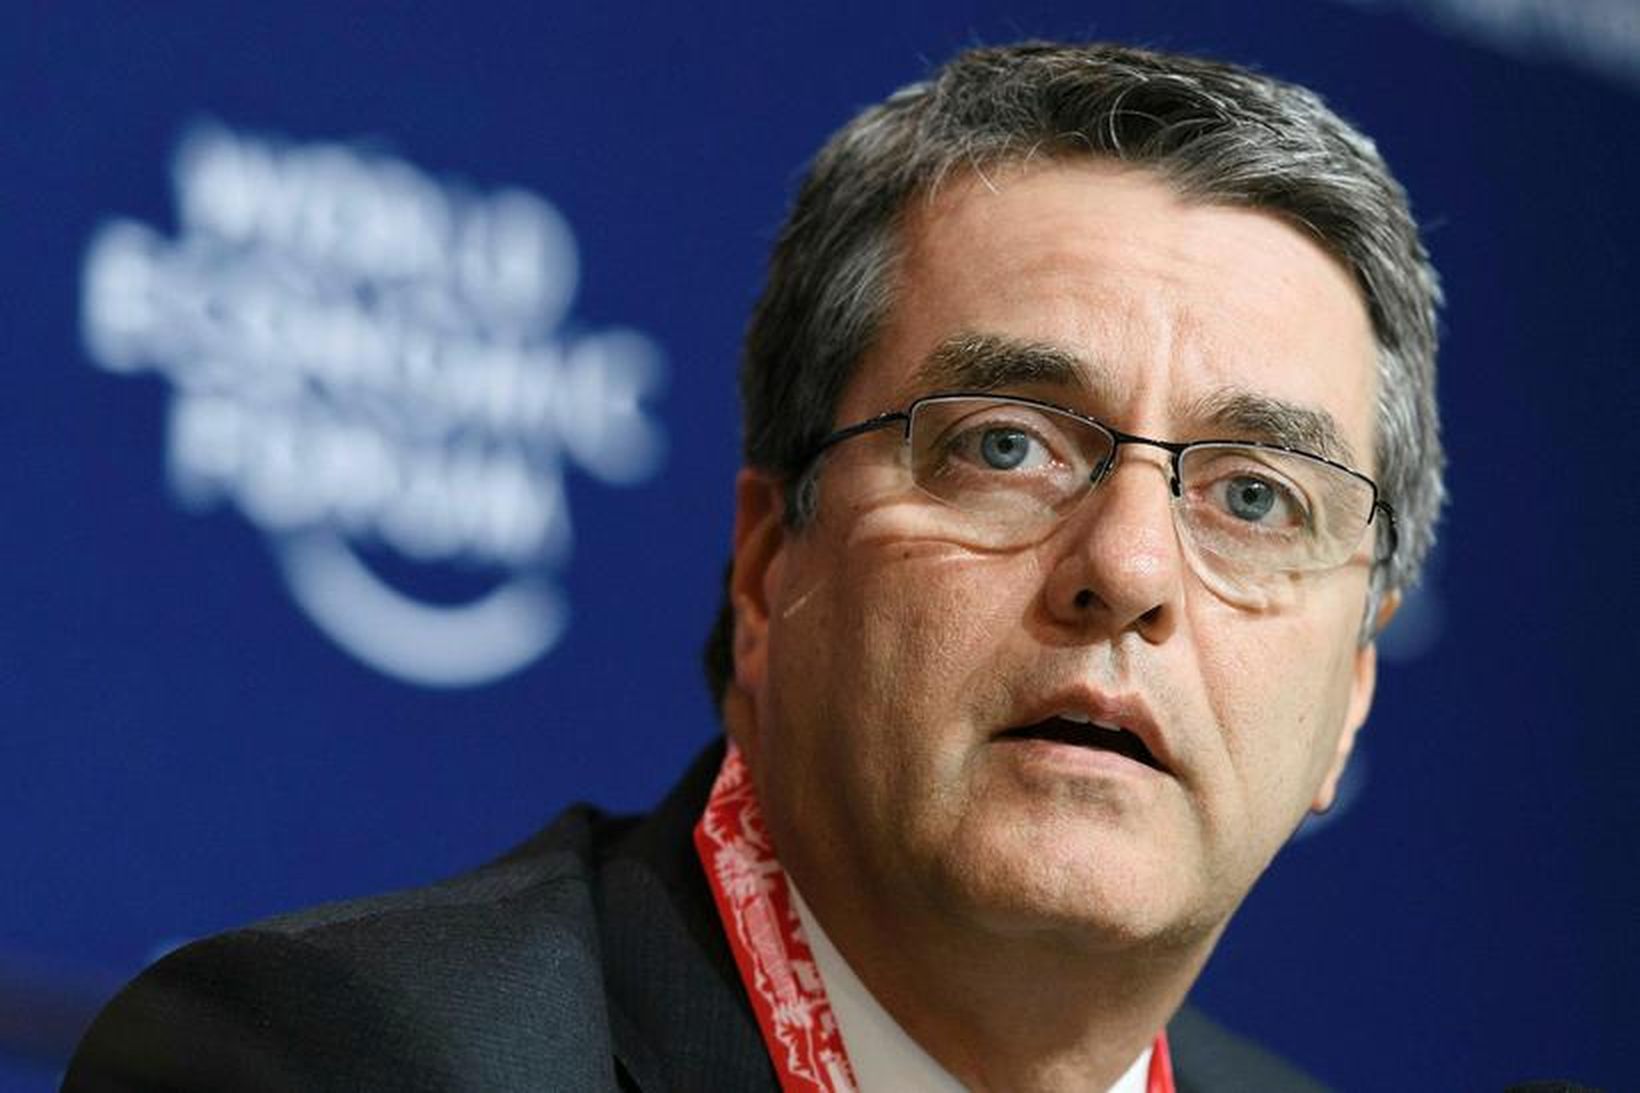 Roberto Azevedo, framkvæmdastjóri WTO.